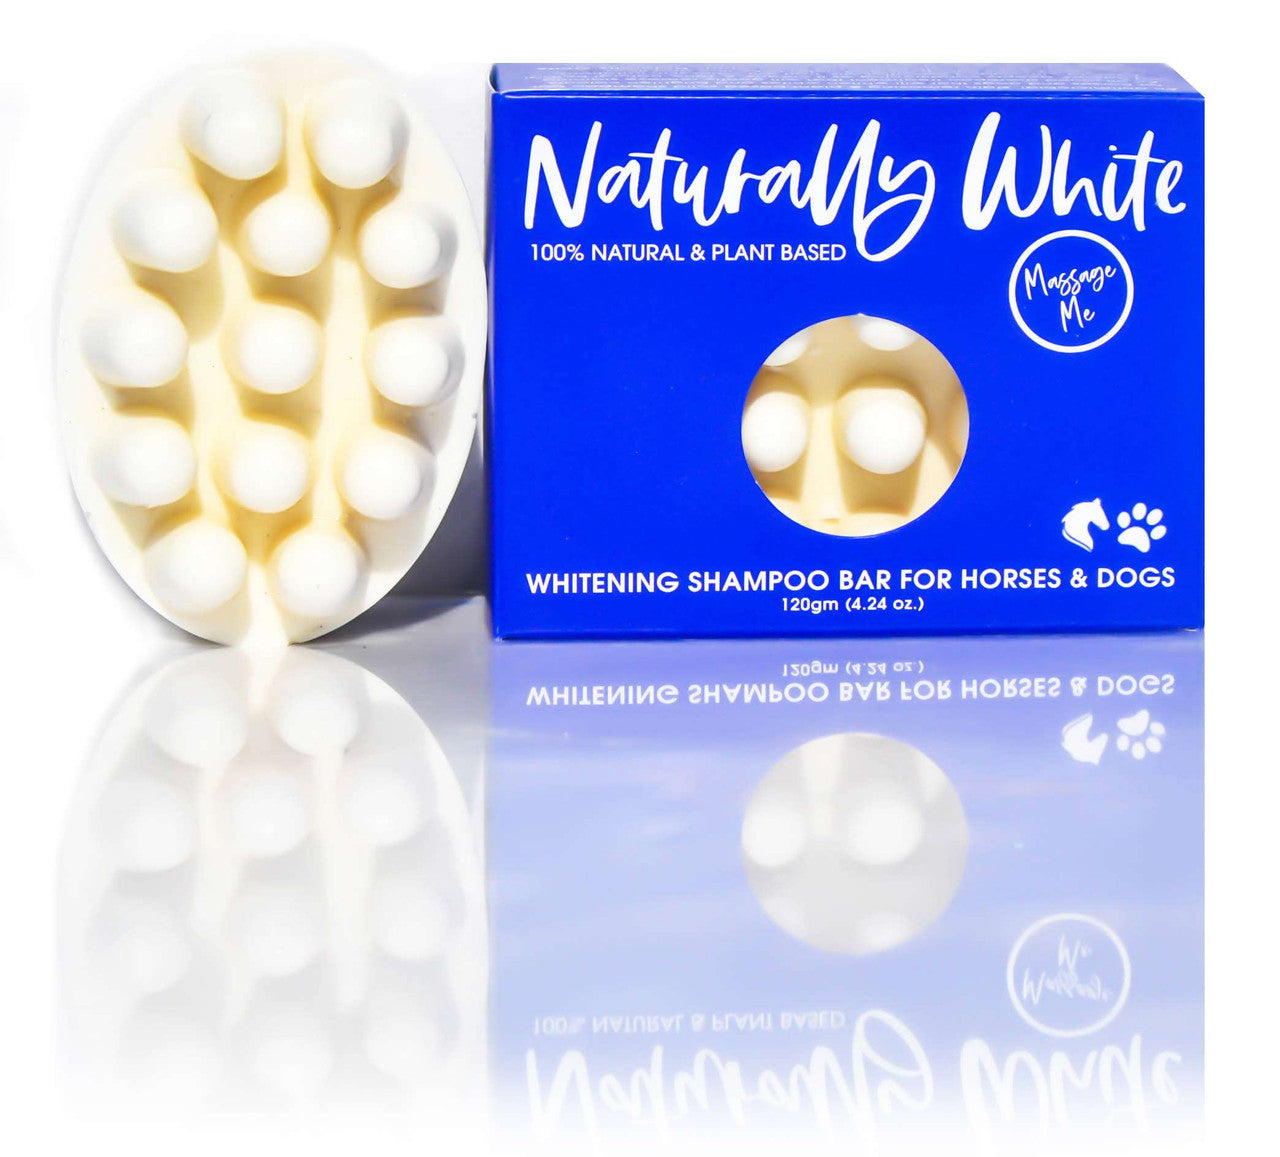 NATURALLY WHITE Whitening Shampoo Bar for Horses & Dogs